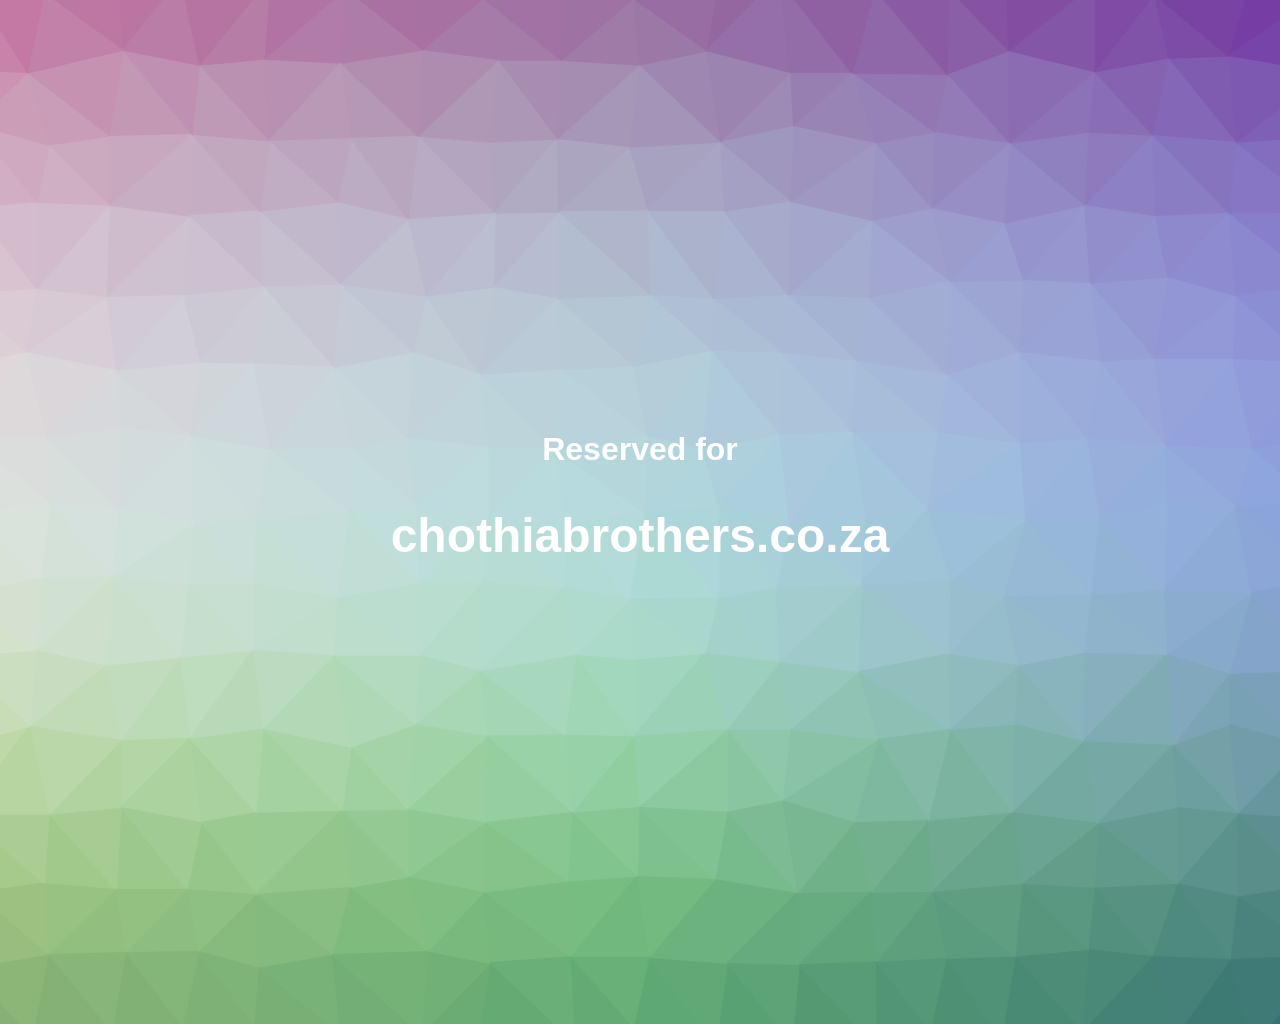 chothiabrothers.co.za